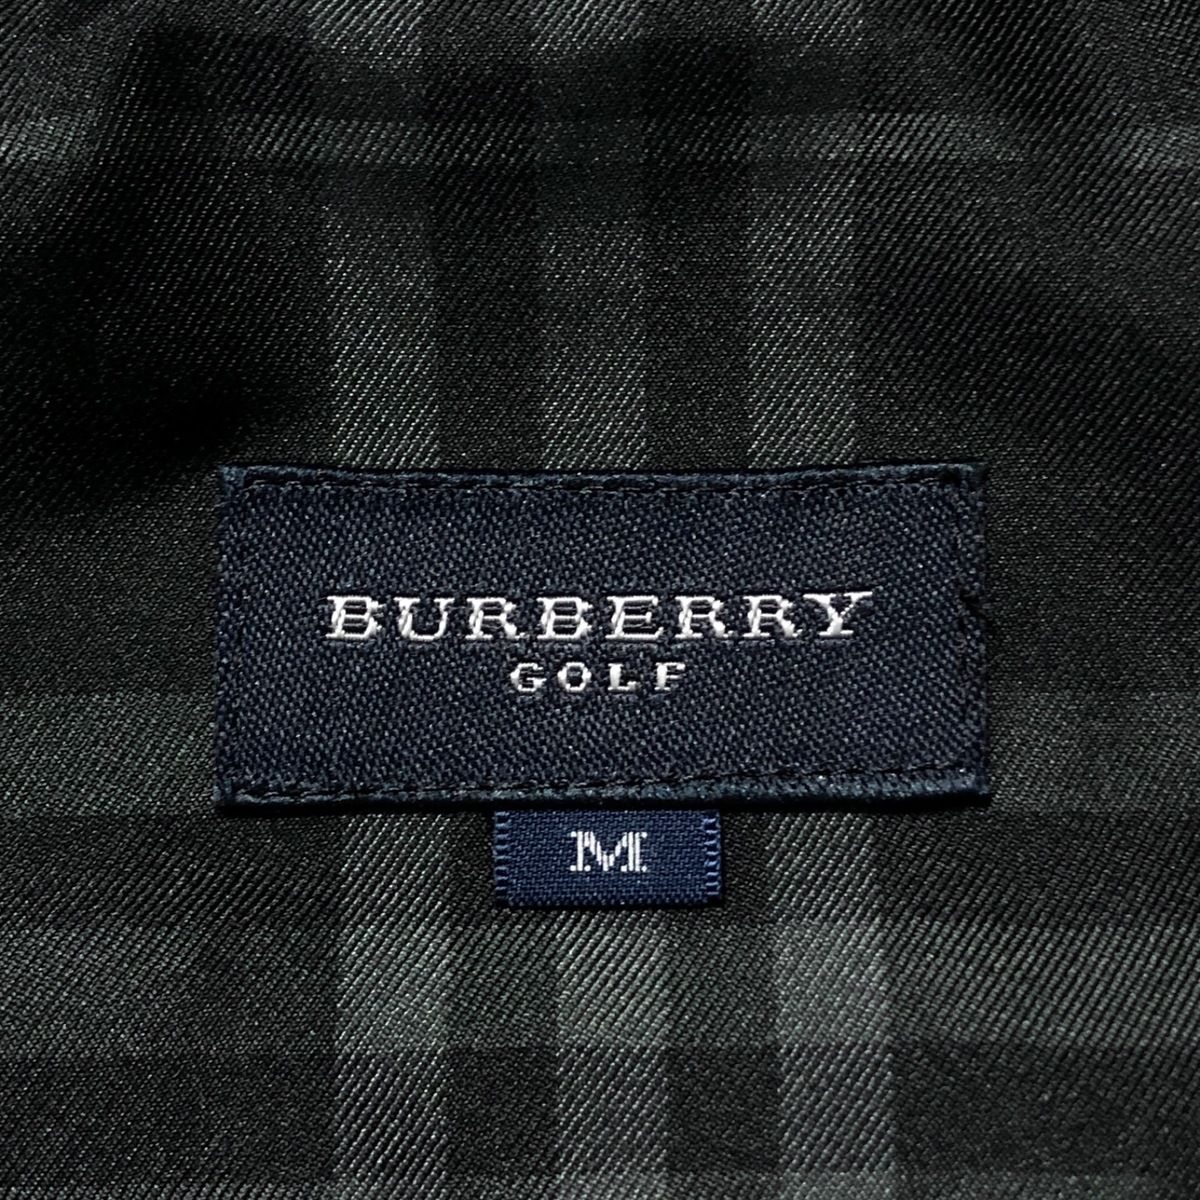 BURBERRYGOLF(バーバリーゴルフ) ブルゾン サイズM メンズ - 黒 長袖 